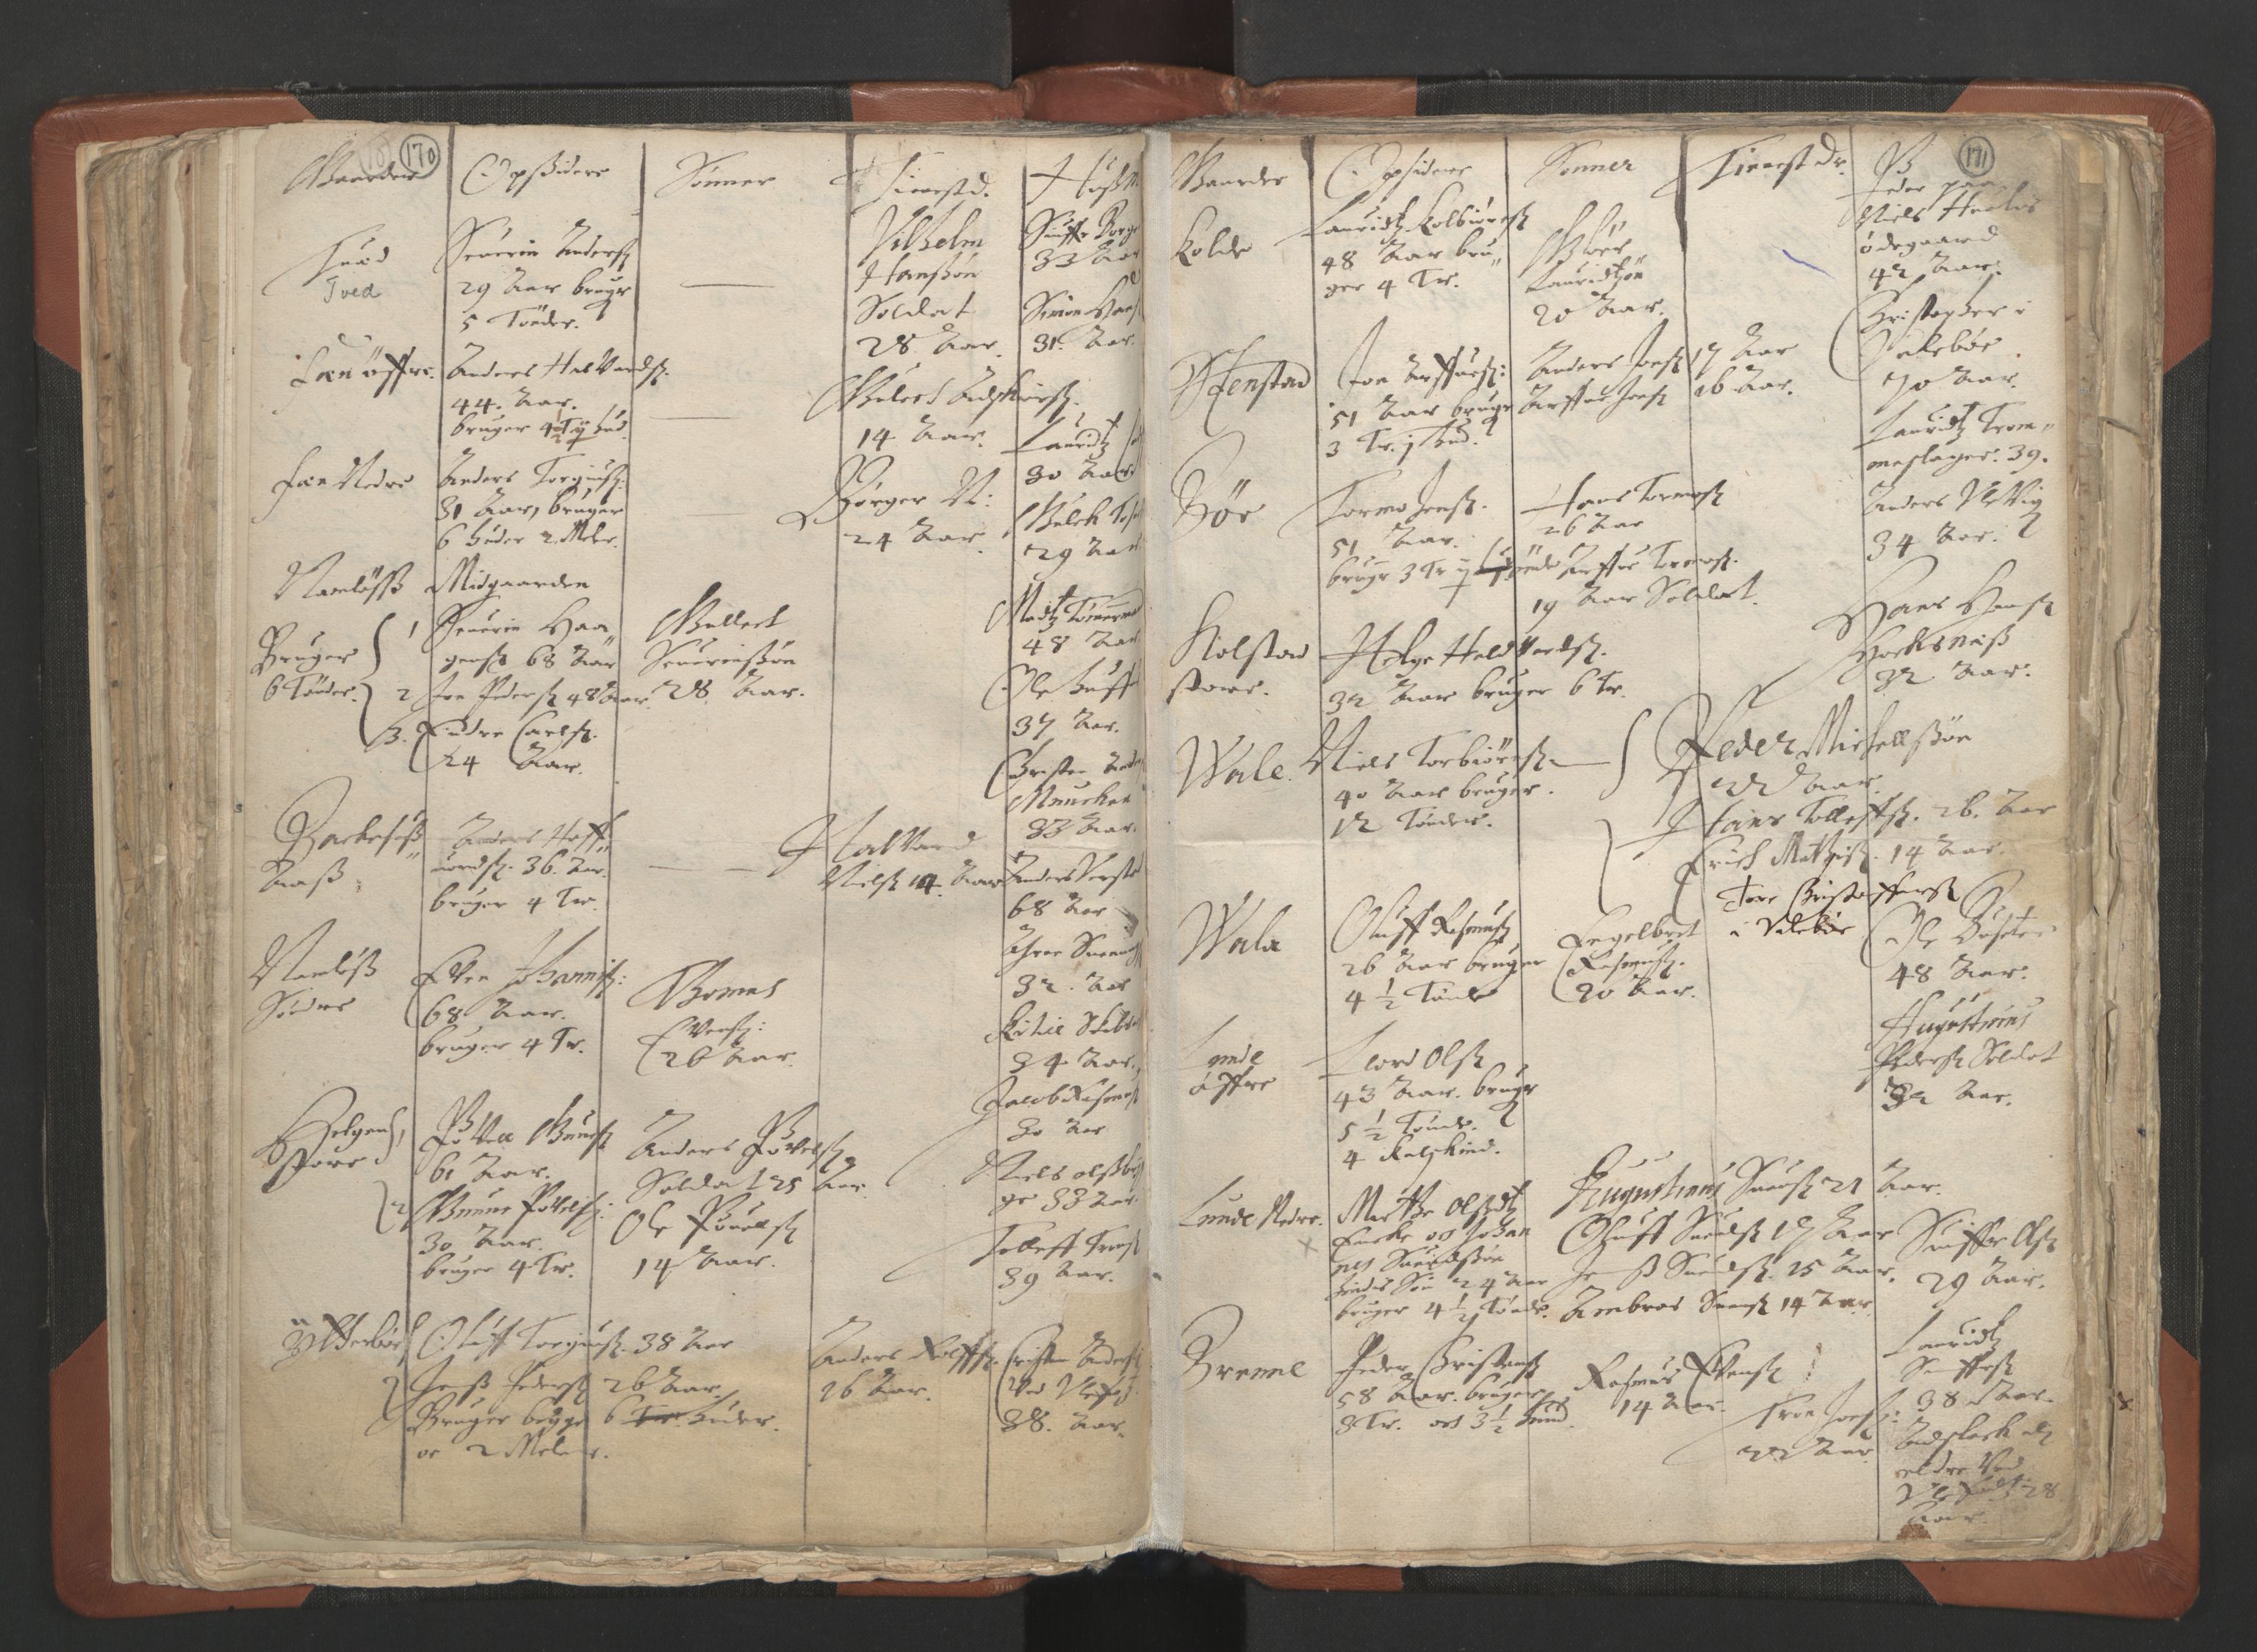 RA, Vicar's Census 1664-1666, no. 12: Øvre Telemark deanery, Nedre Telemark deanery and Bamble deanery, 1664-1666, p. 170-171